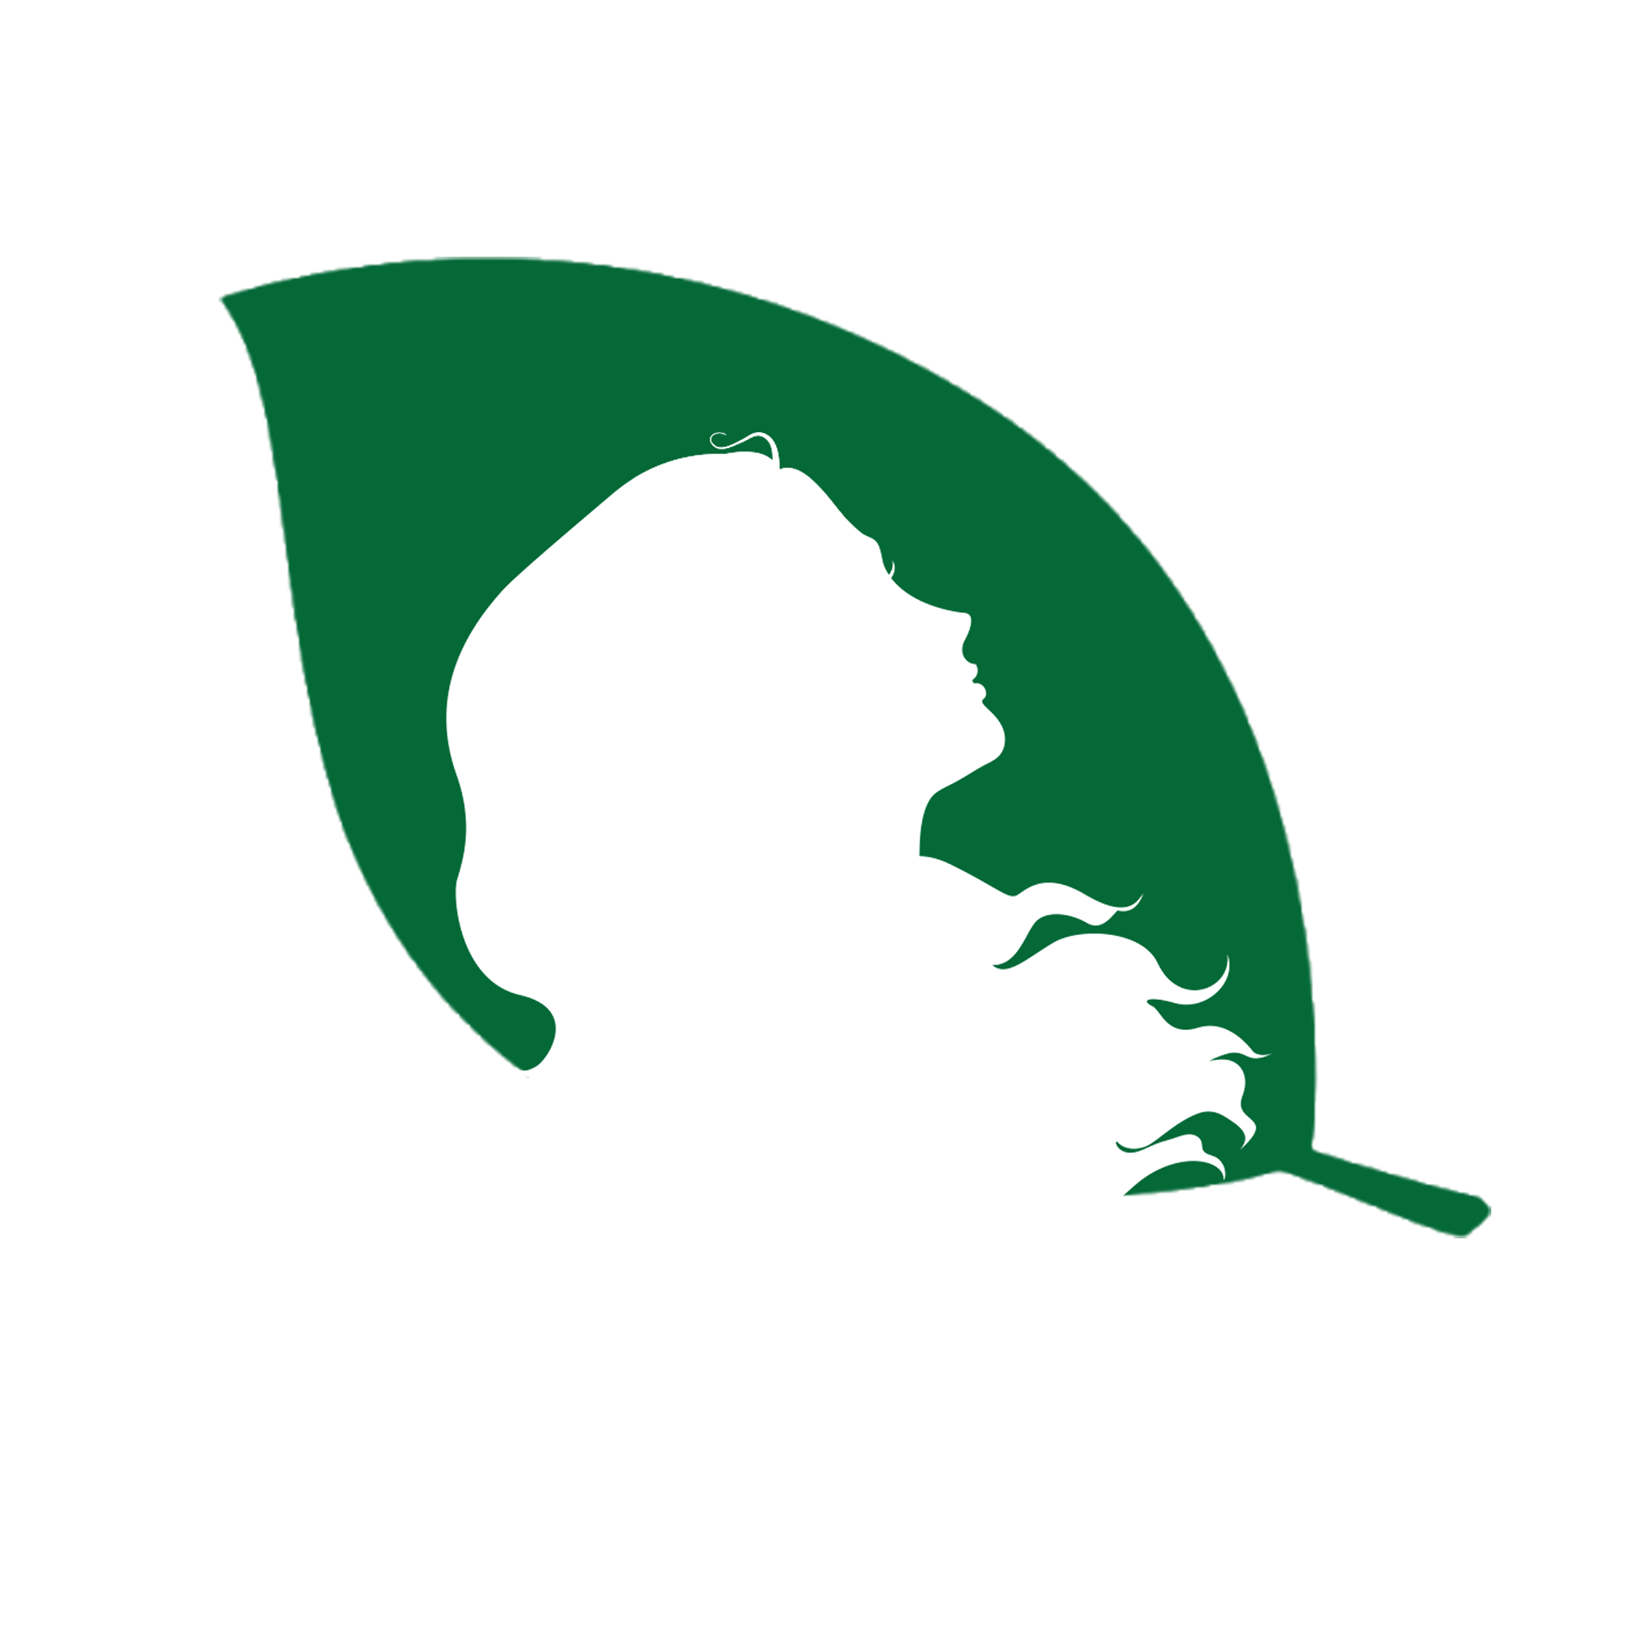 Mary J's Cannabis Cobourg logo